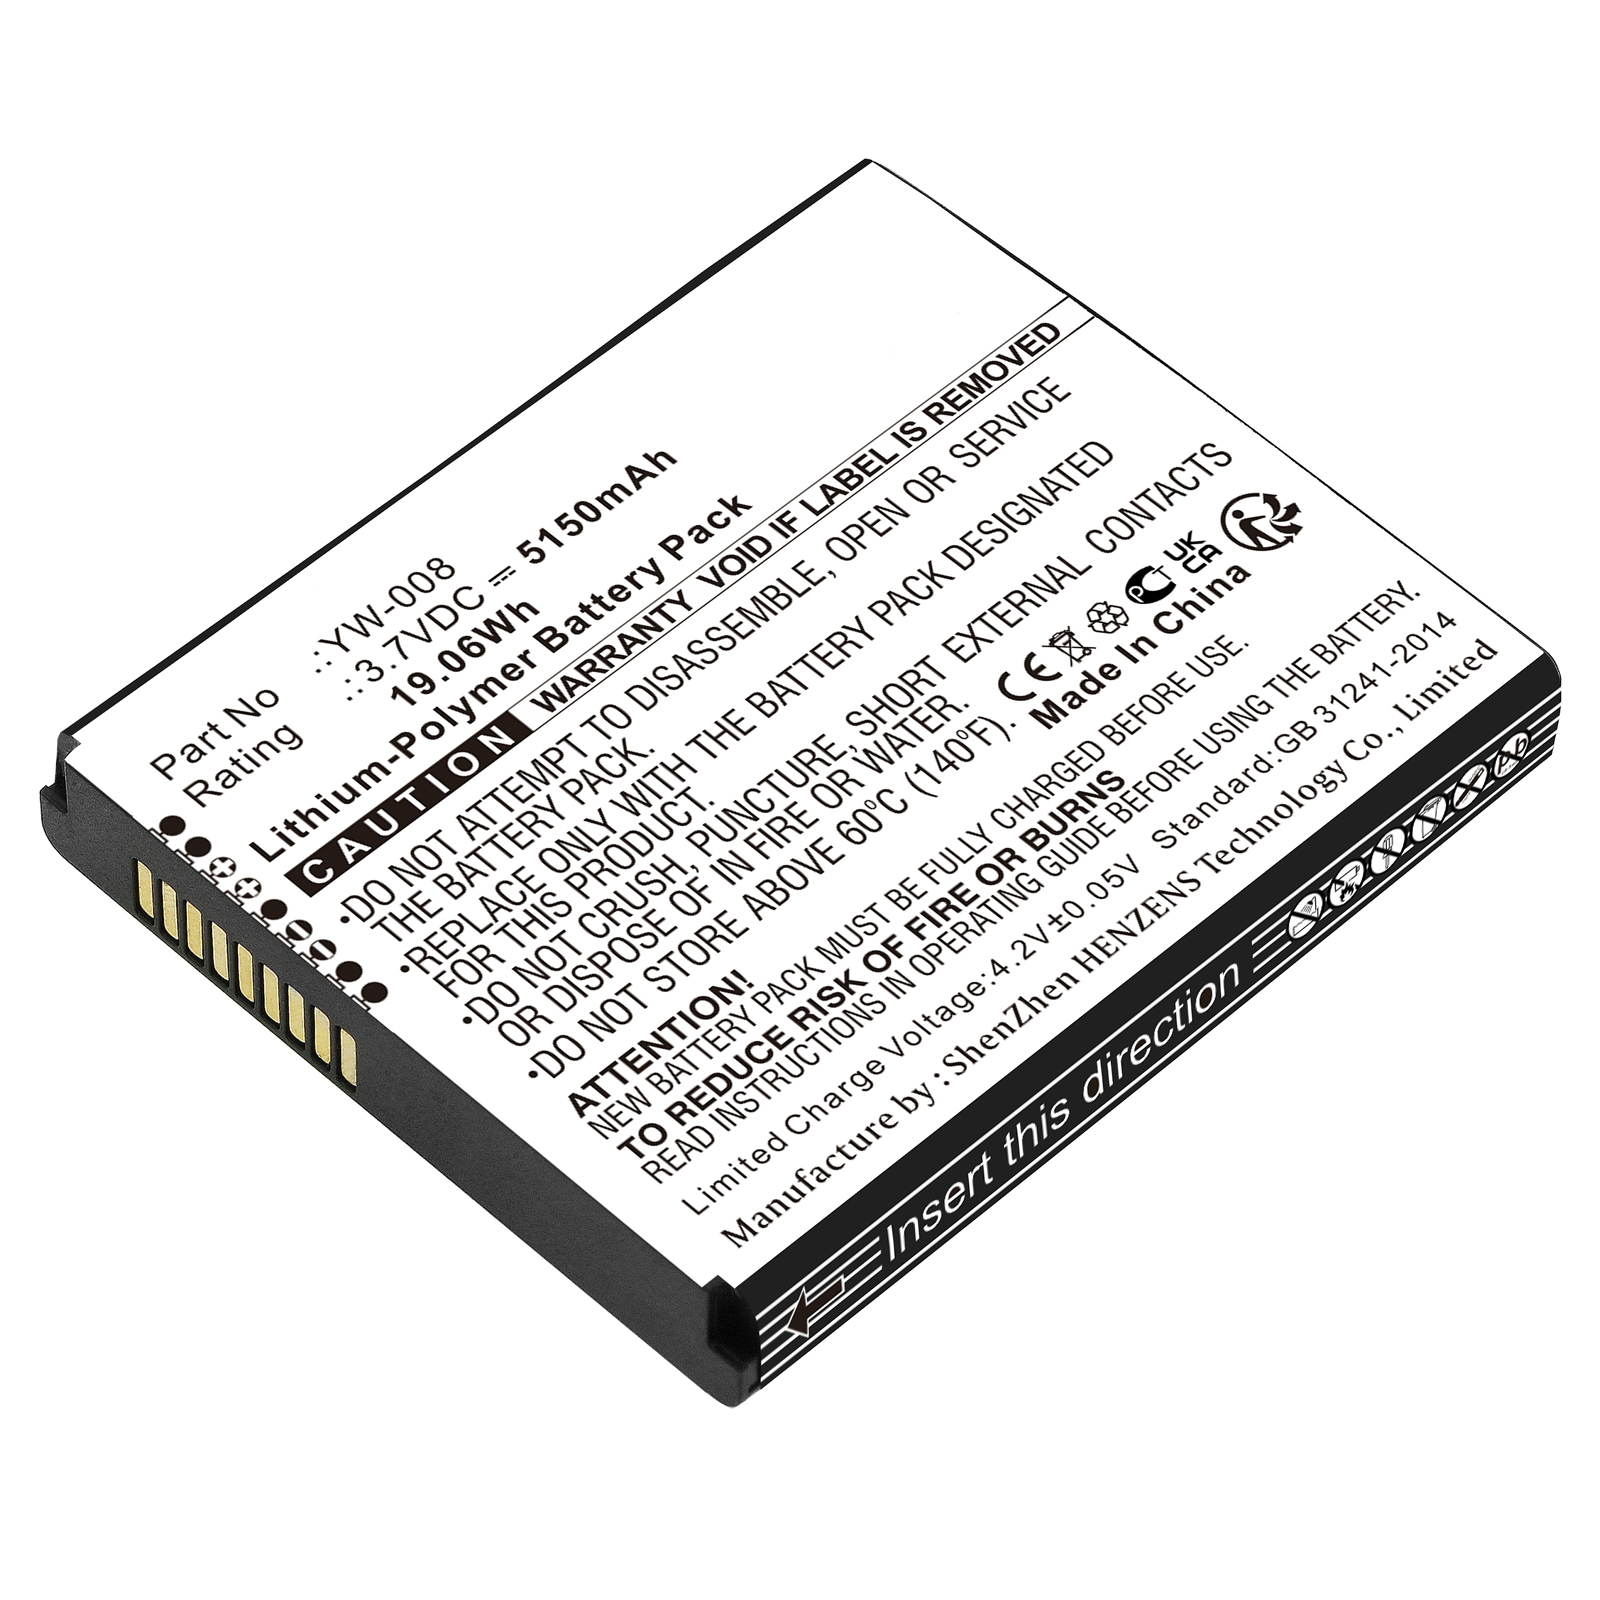 Synergy Digital Credit Card Reader Battery, Compatible with Pax YW-008 Credit Card Reader Battery (Li-Pol, 3.7V, 5150mAh)